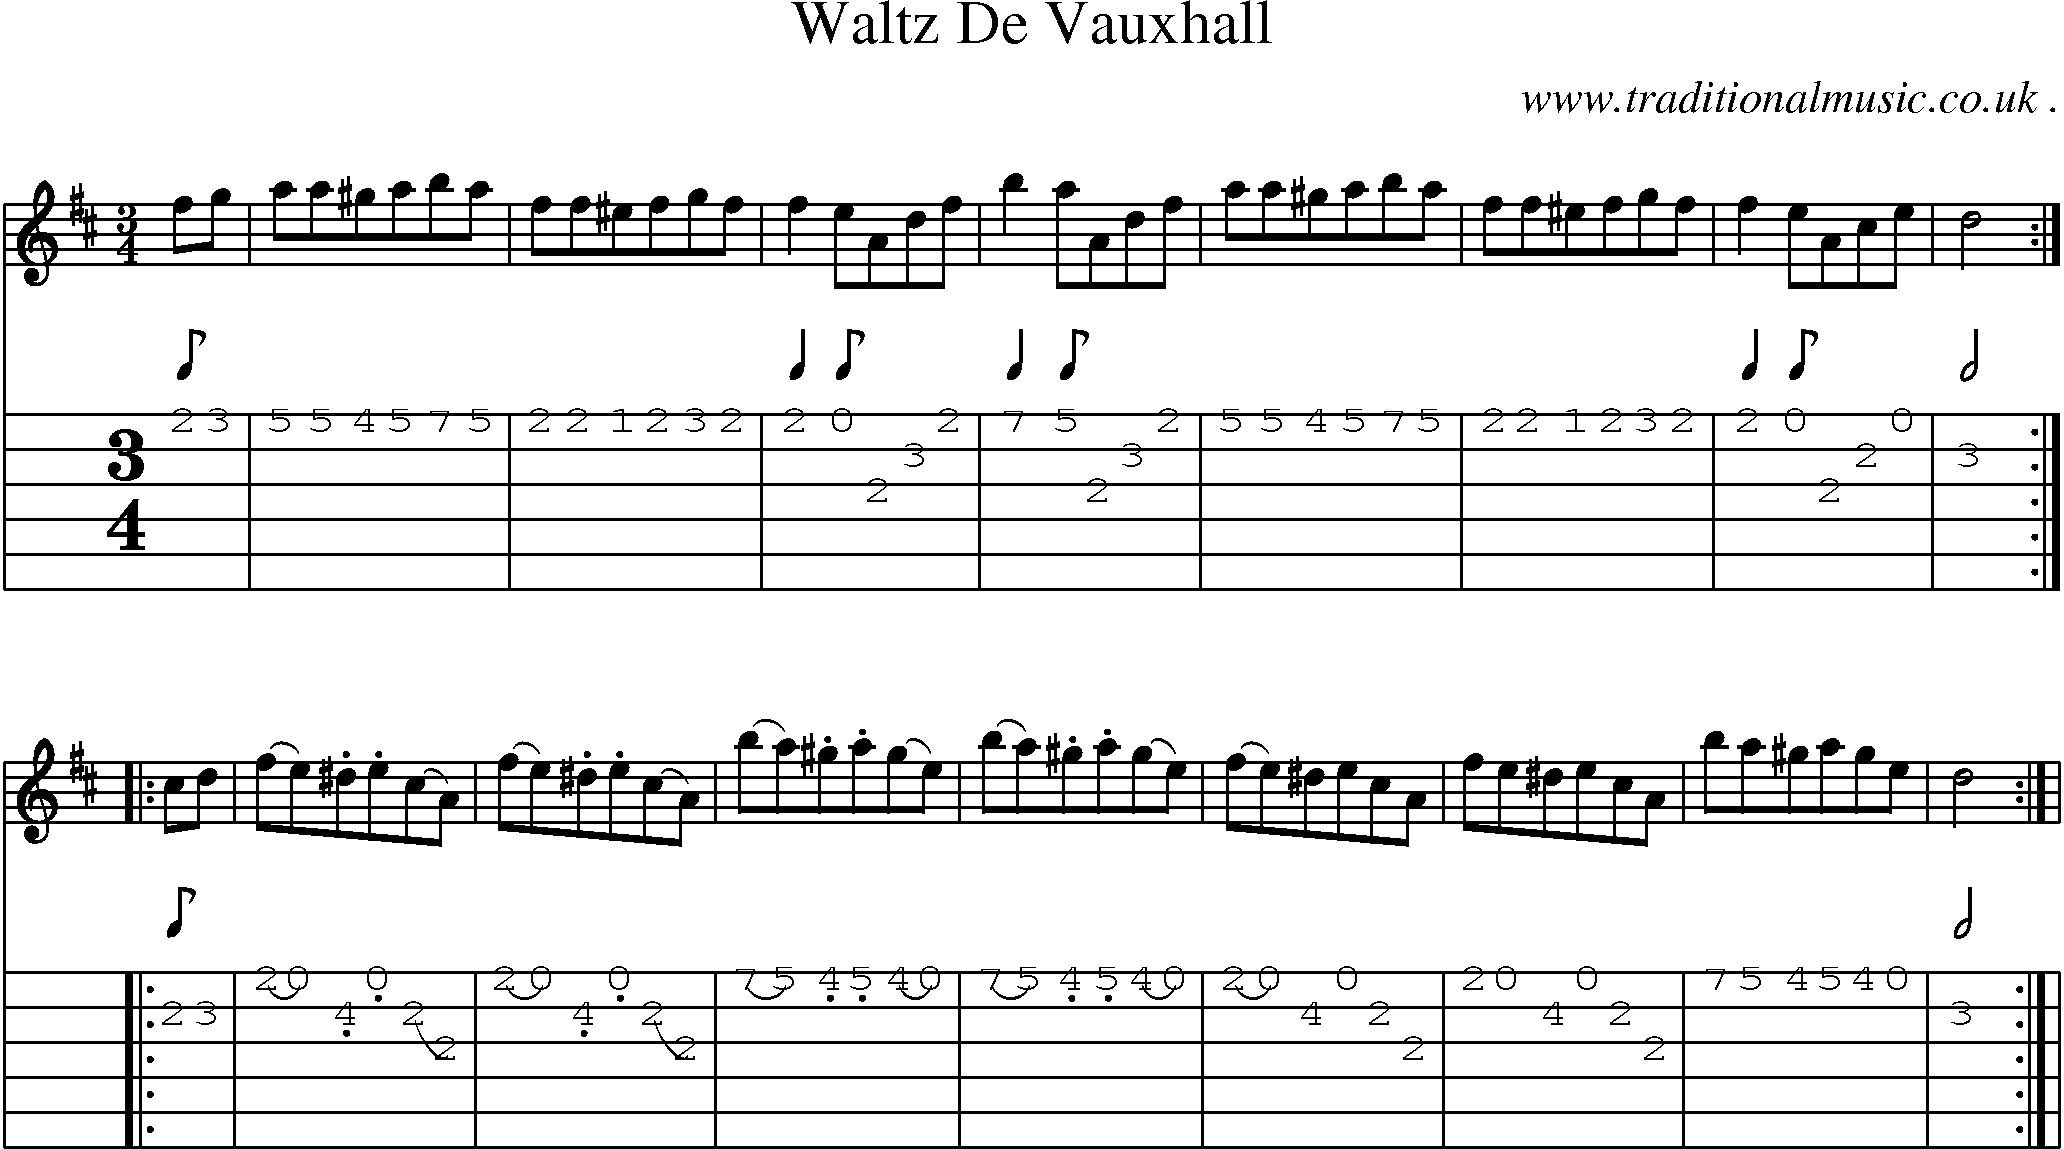 Sheet-Music and Guitar Tabs for Waltz De Vauxhall